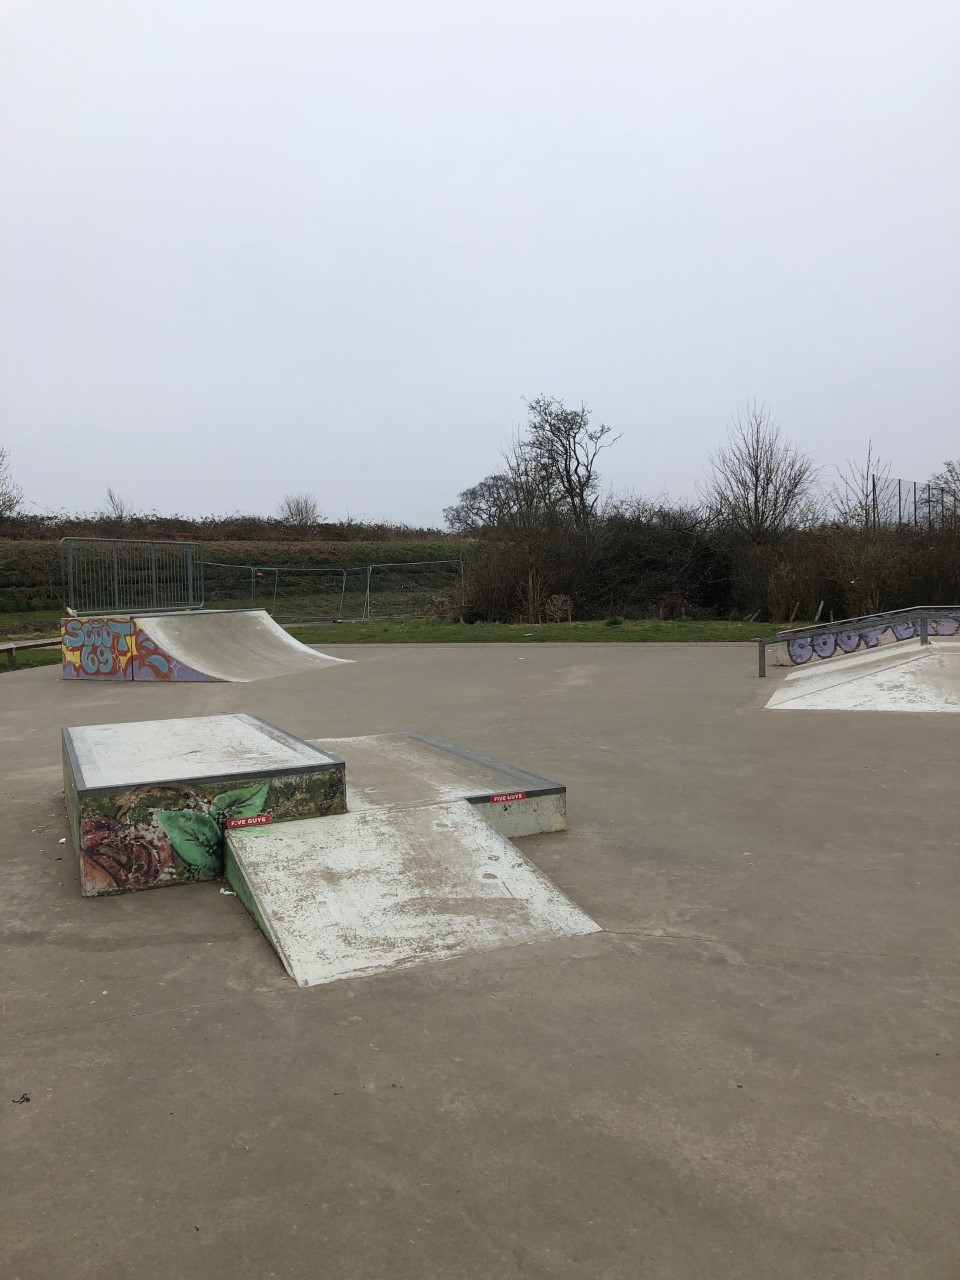 coopers edge skatepark review tips skateboarding in gloucestershire u k